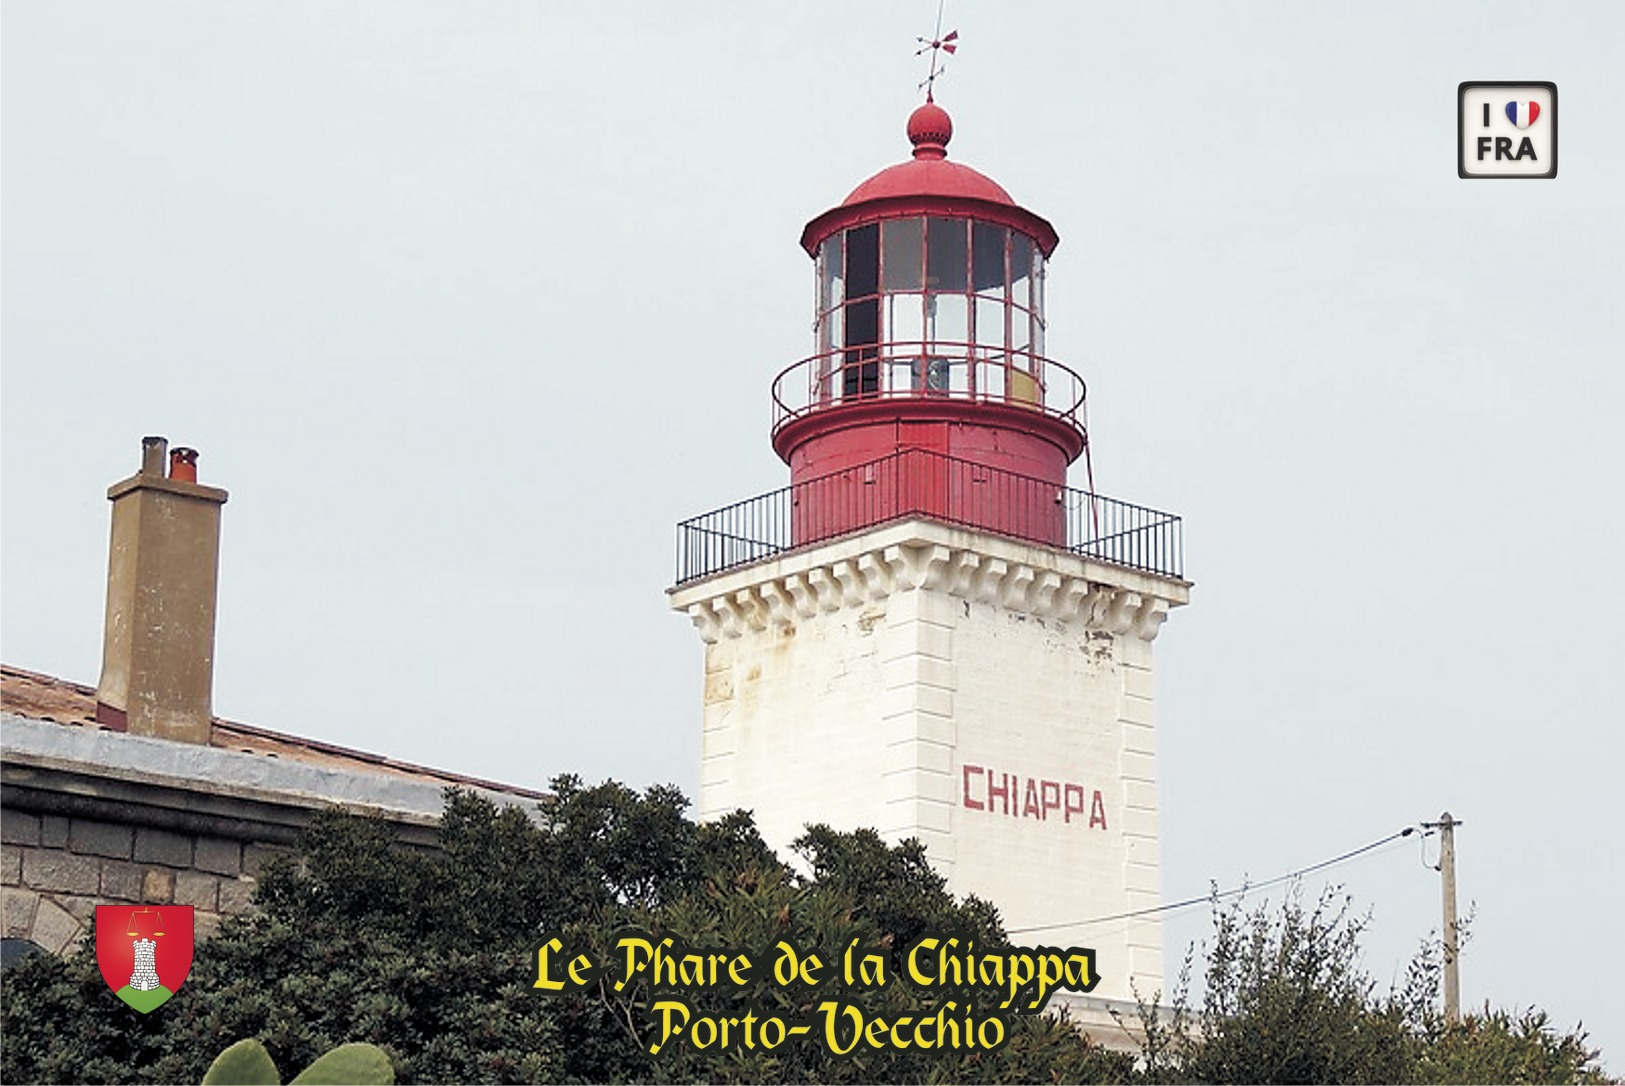 Set 6 Cartes Postales, Phares, Lighthouses Of Europe, France, Porto-Vecchio, Le Phare De La Chiappa - Fari